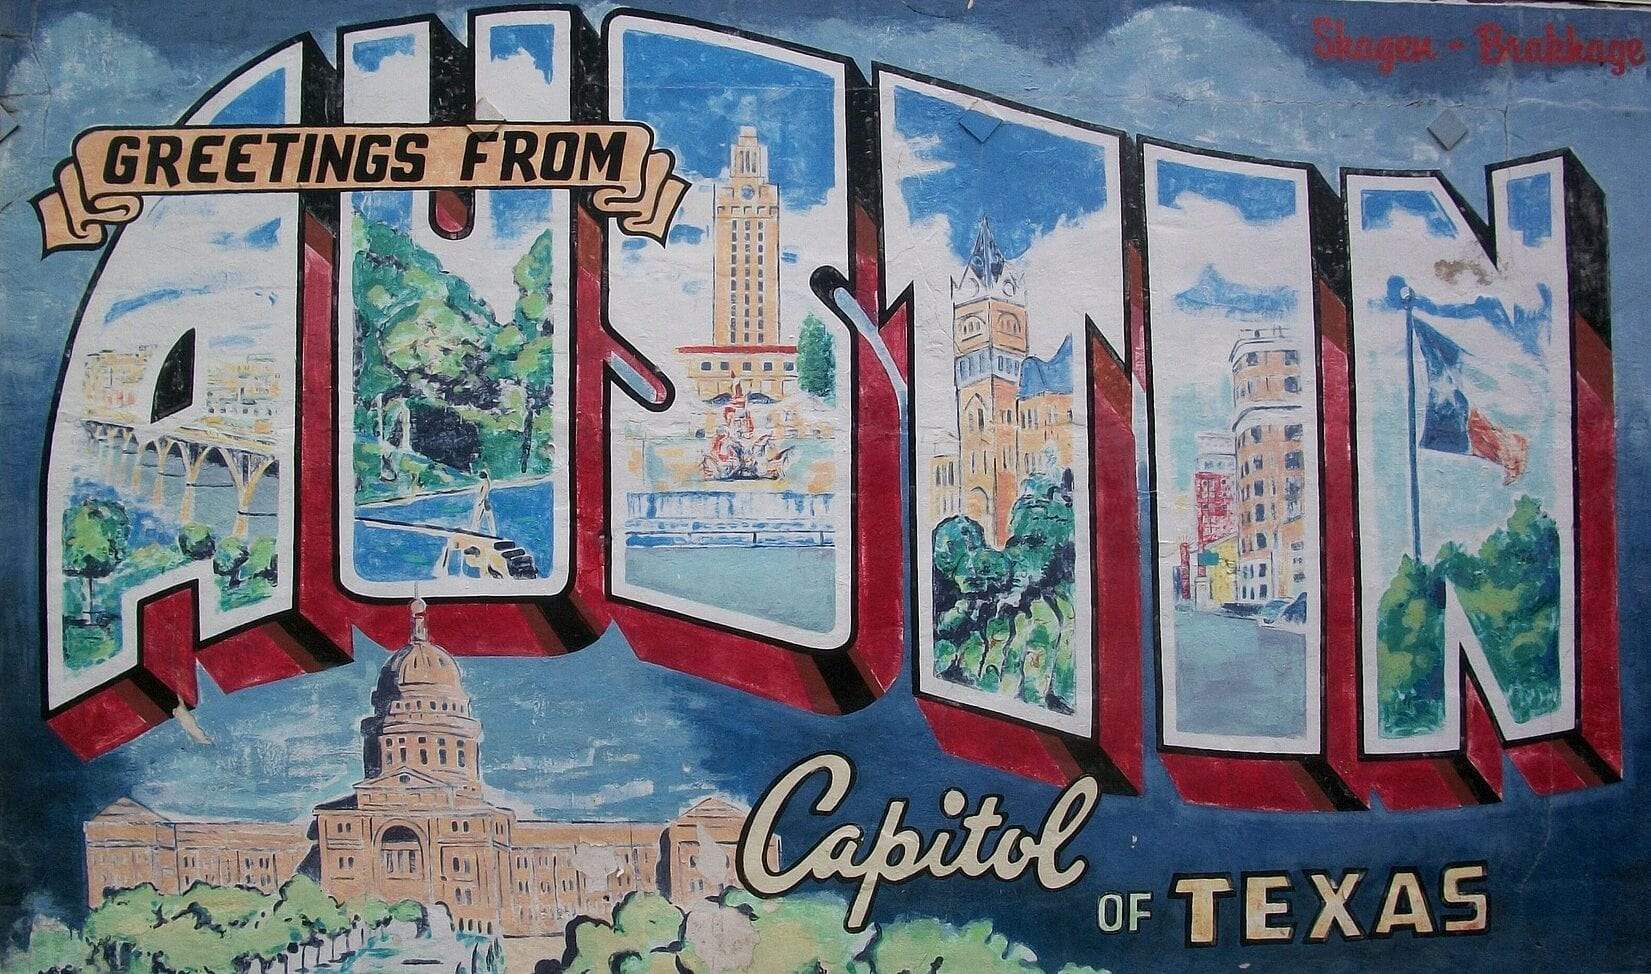 Greetings from Austin, Texas mural